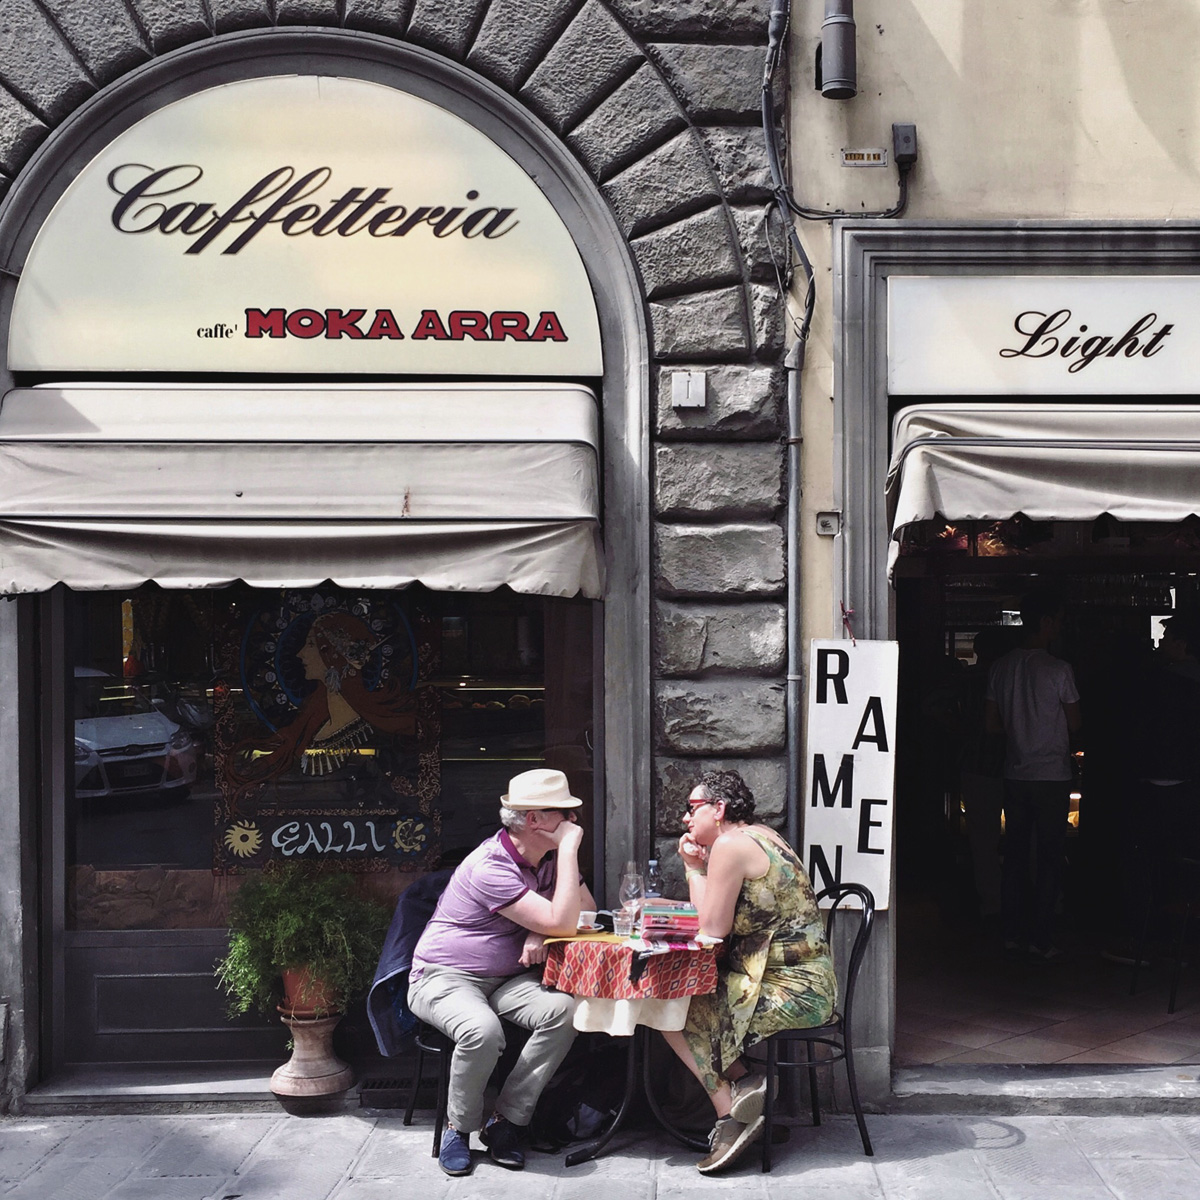 Cafe' customs / ph. 2016 Marco Badiani / The Florentine